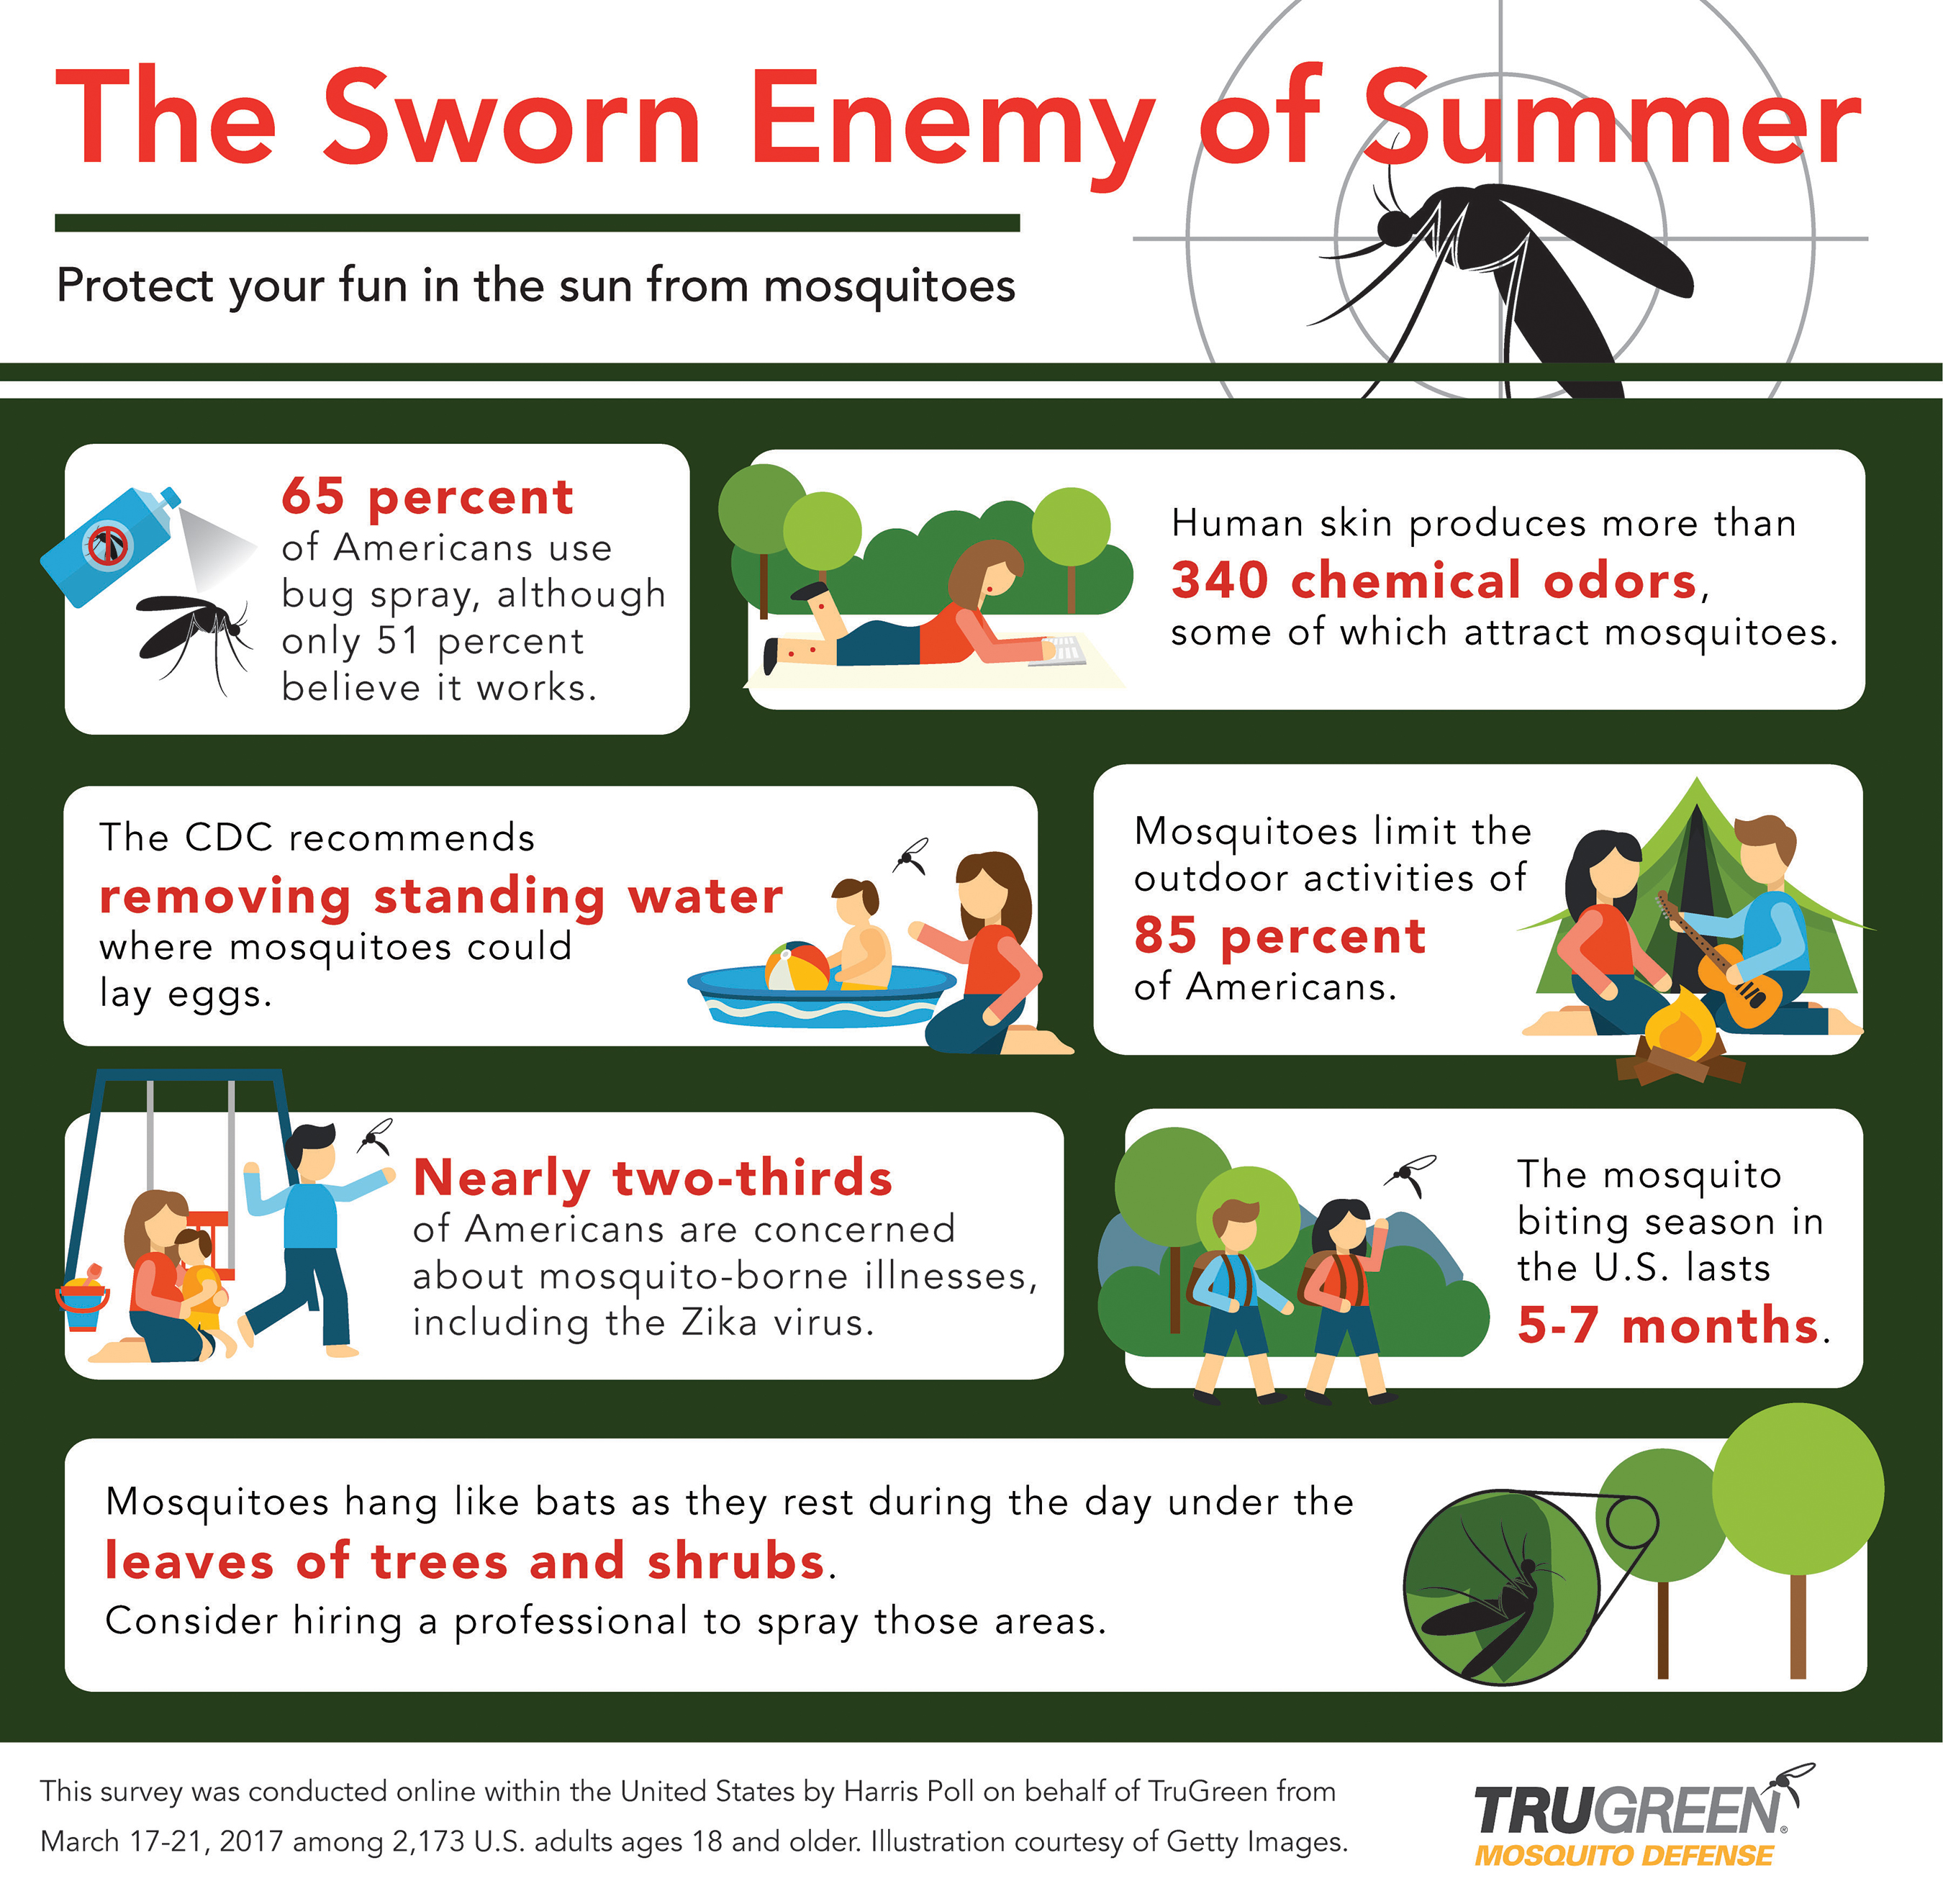 The Sworn Enemy of Summer